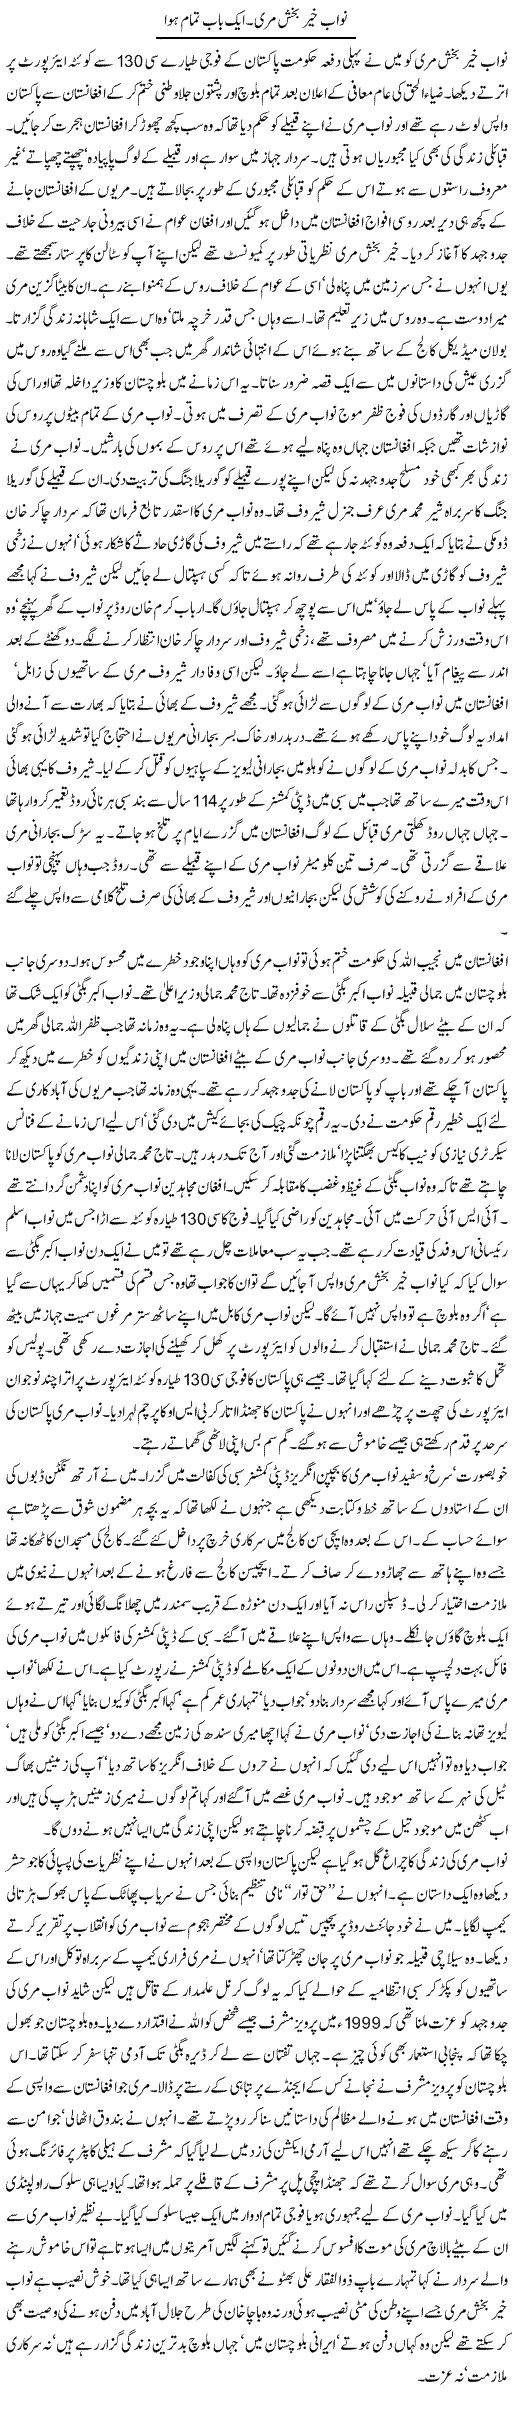 Nawab Khair Bakhsh Marri Aik Bab Tamam Hua | Orya Maqbool Jan | Daily Urdu Columns